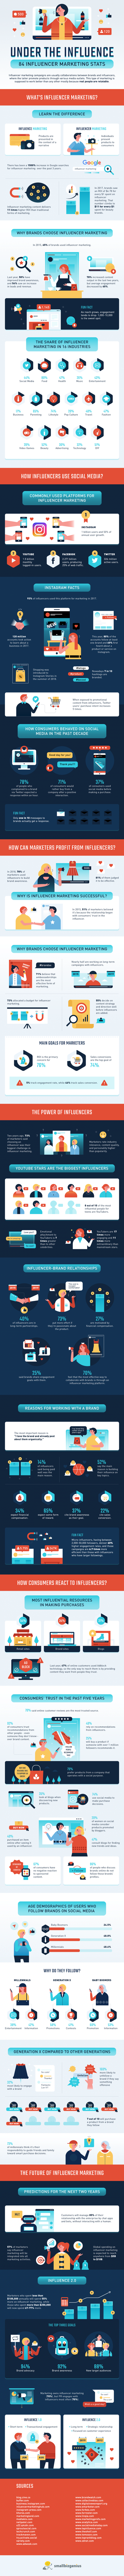 Influencer-marketing-statistics-infographic-2019